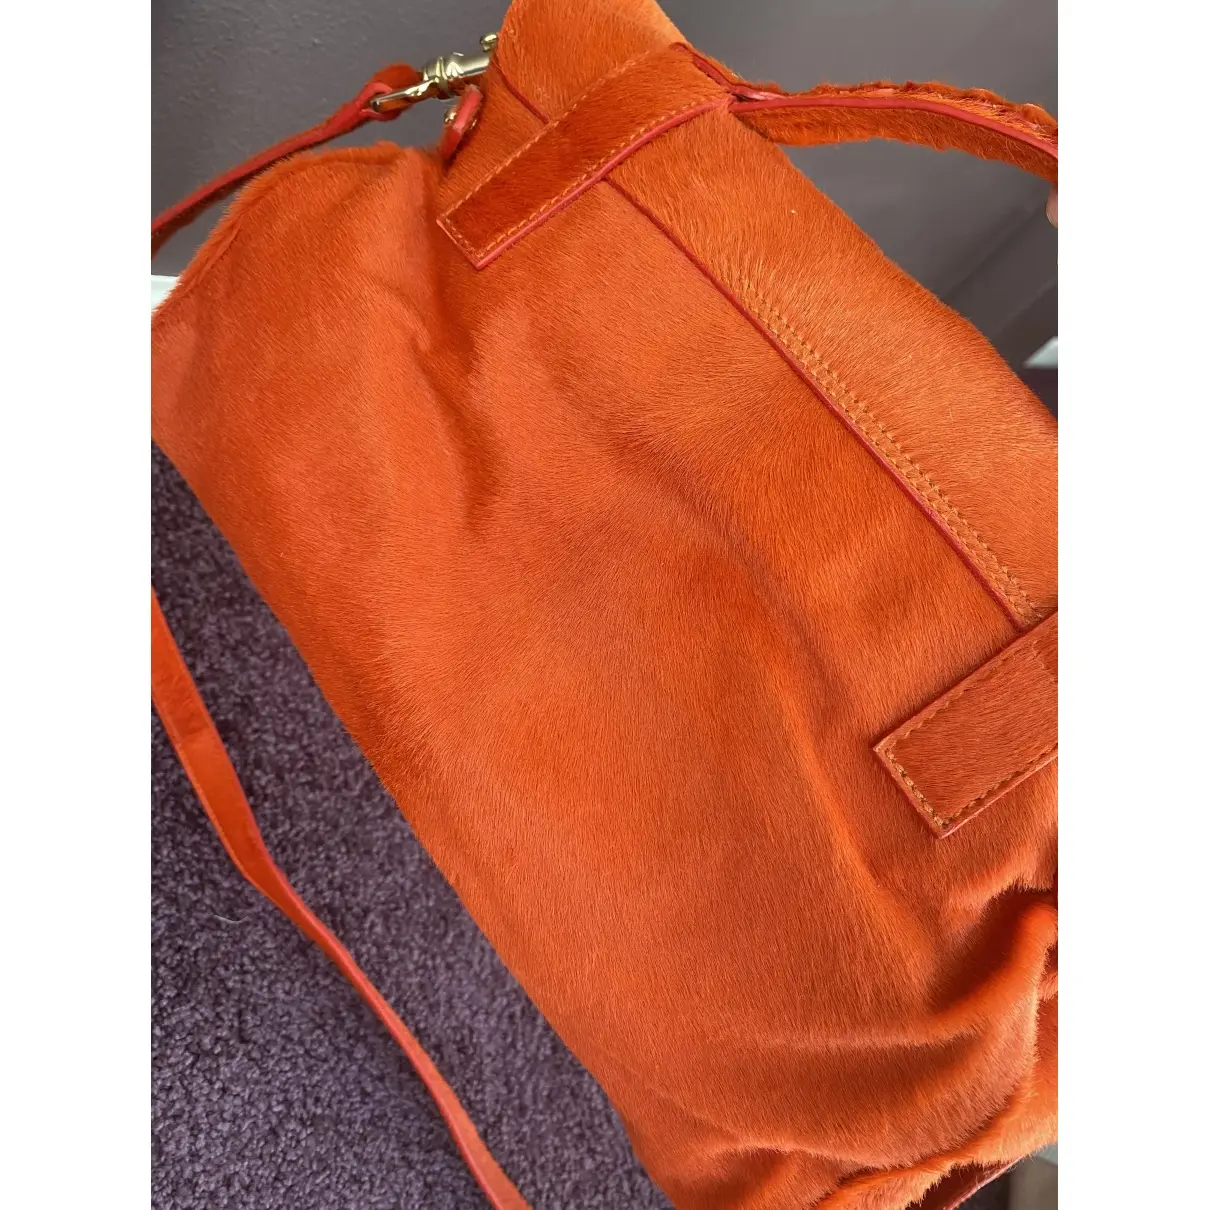 Mulberry Alexa pony-style calfskin handbag for sale